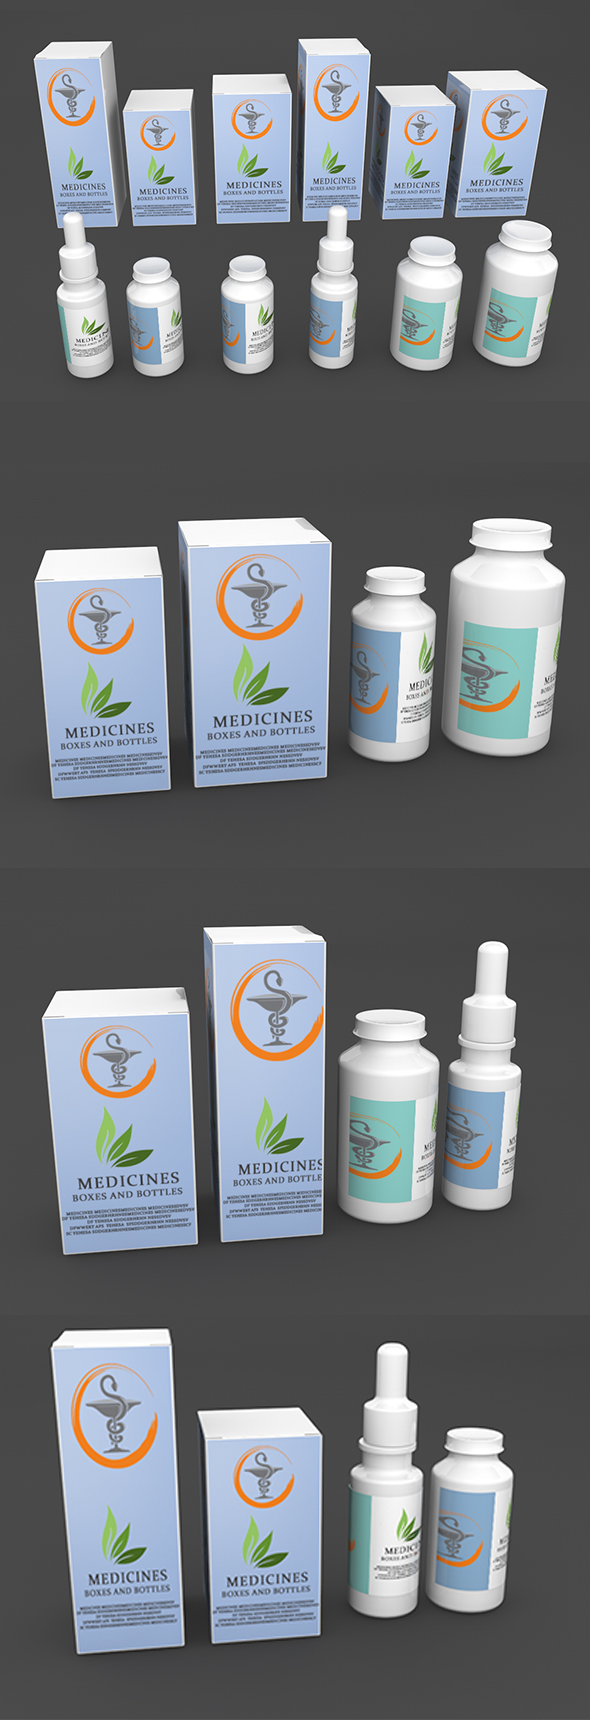 Medicines in boxes - 3Docean 22971091